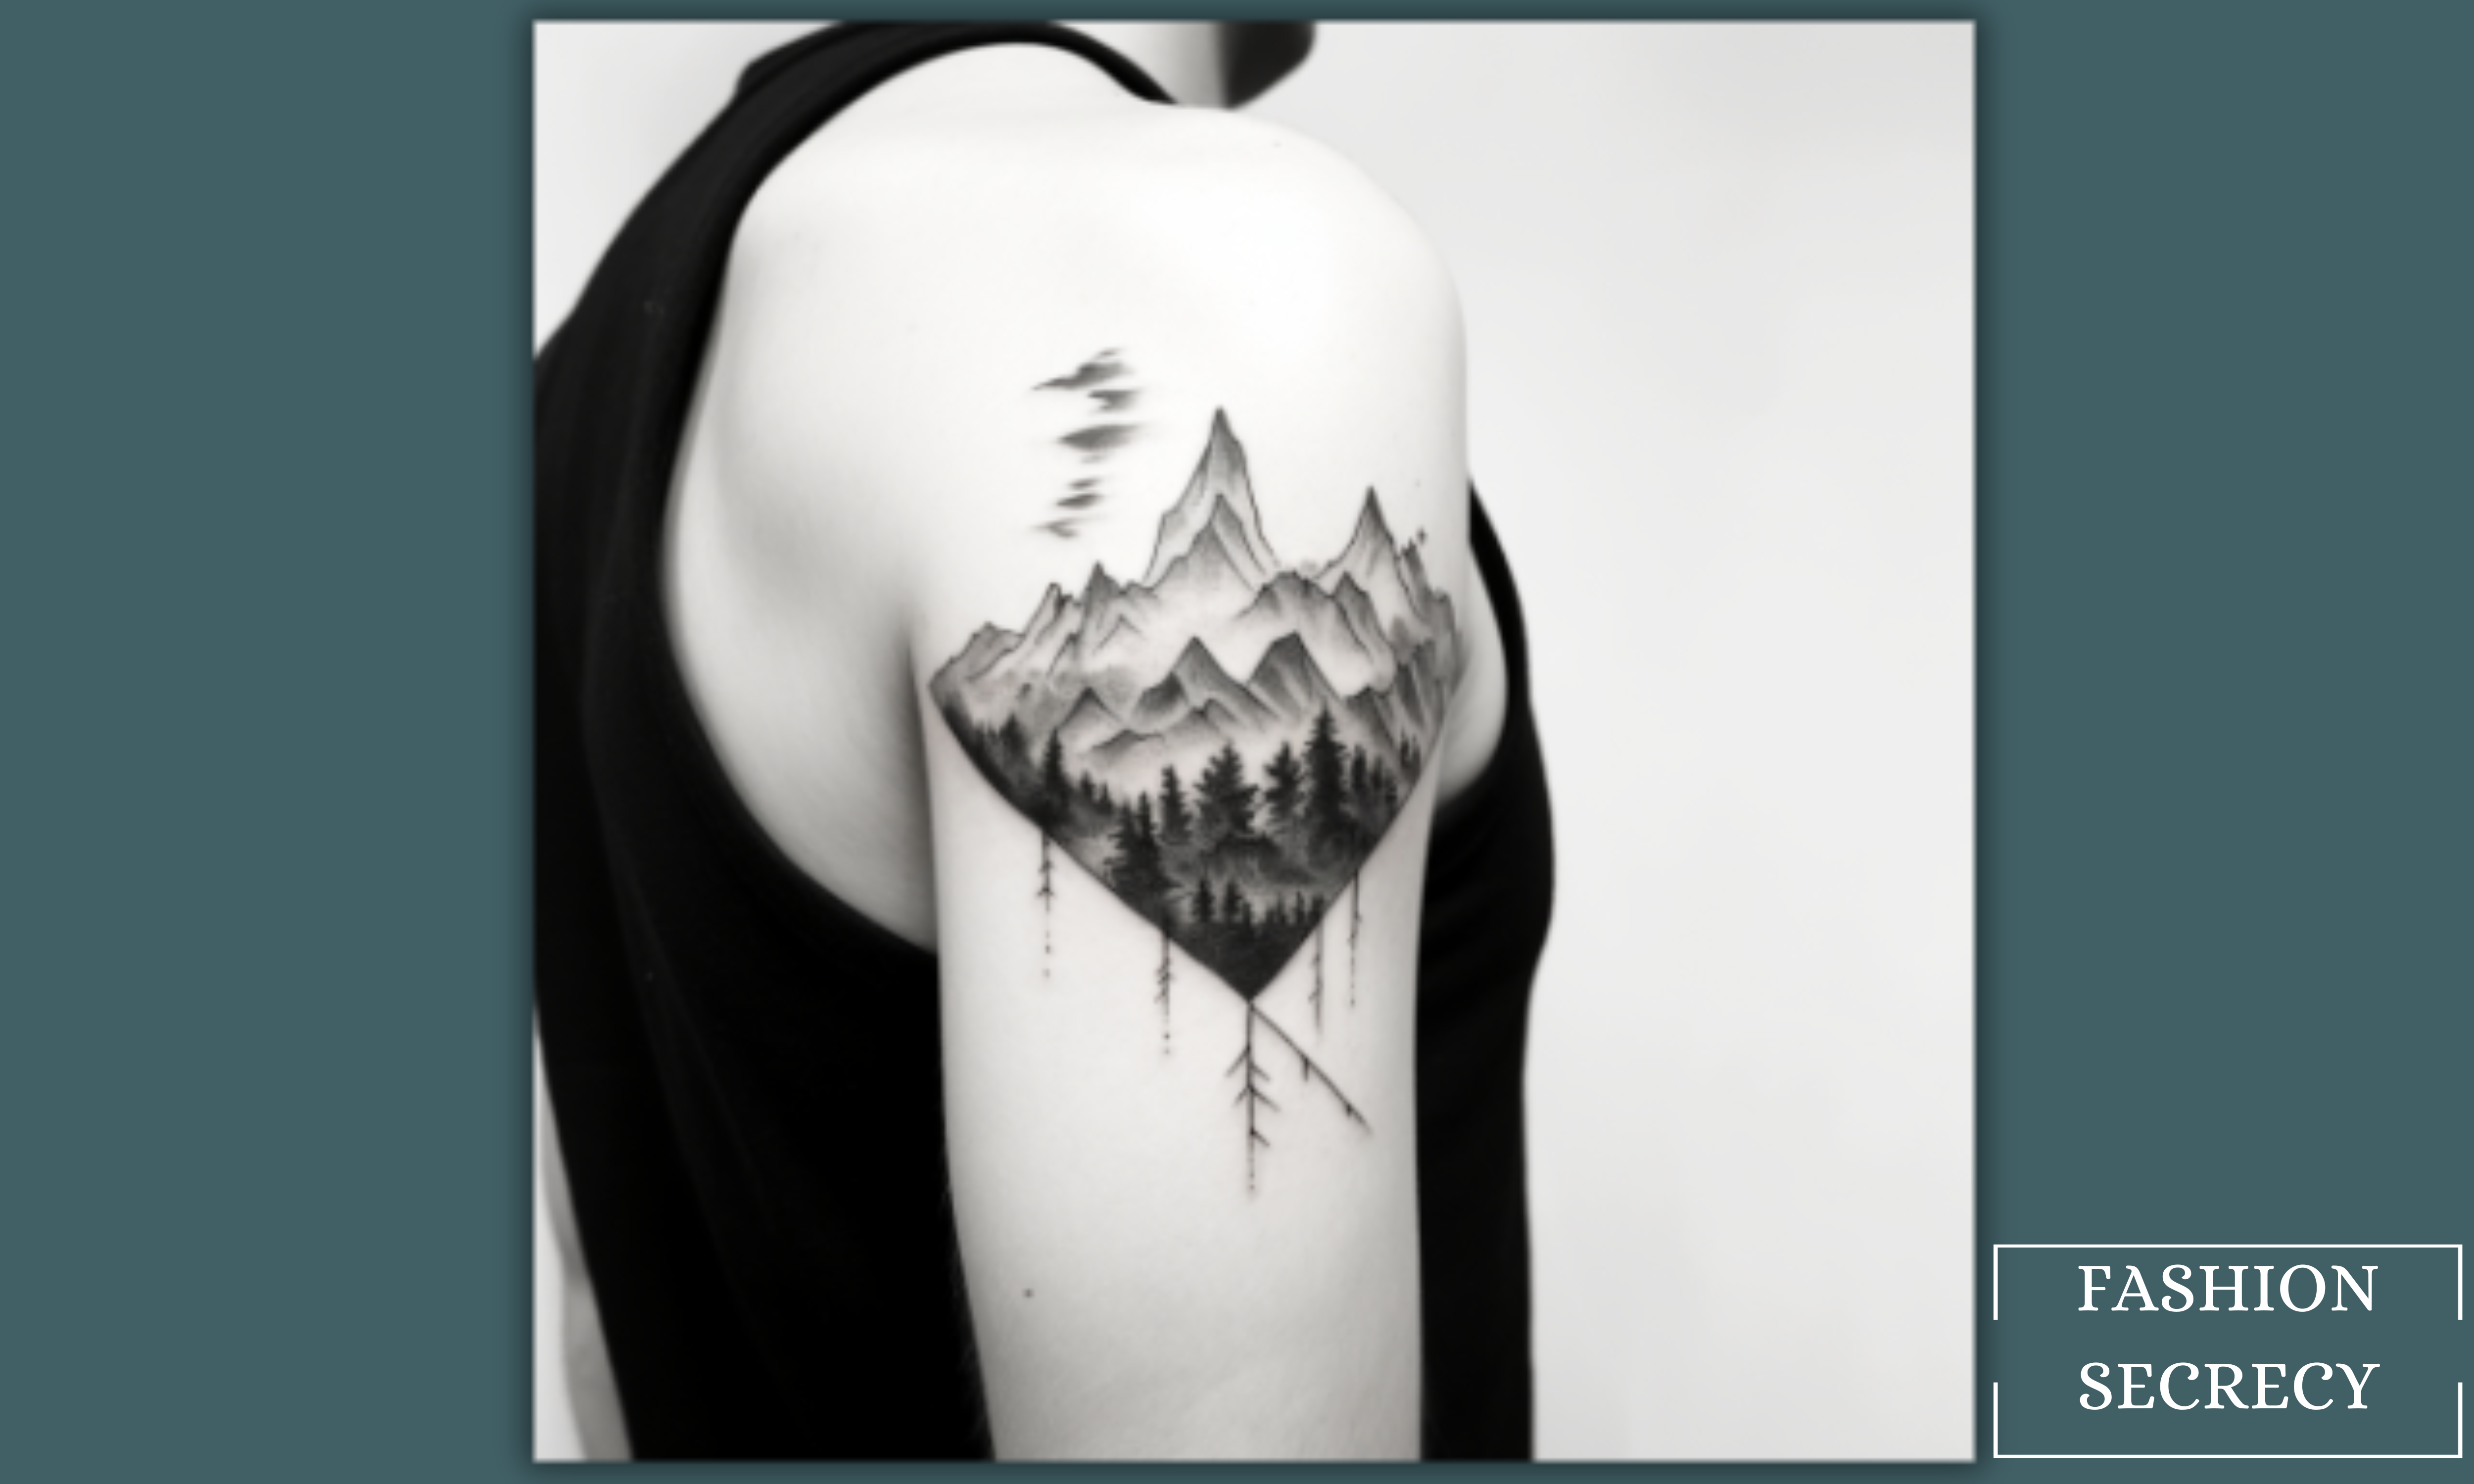 Zealand Tattoo - So you wanted some “simple” mountain tattoos? . . .  #zealandtattoo #customdesing #customtattoos #customstudio #fineliner  #mountaintattoo #dotworktattoo #blackamdgreytattoo #compasstattoo  #wavetattoo #finelinetattoo #tattooideas ...